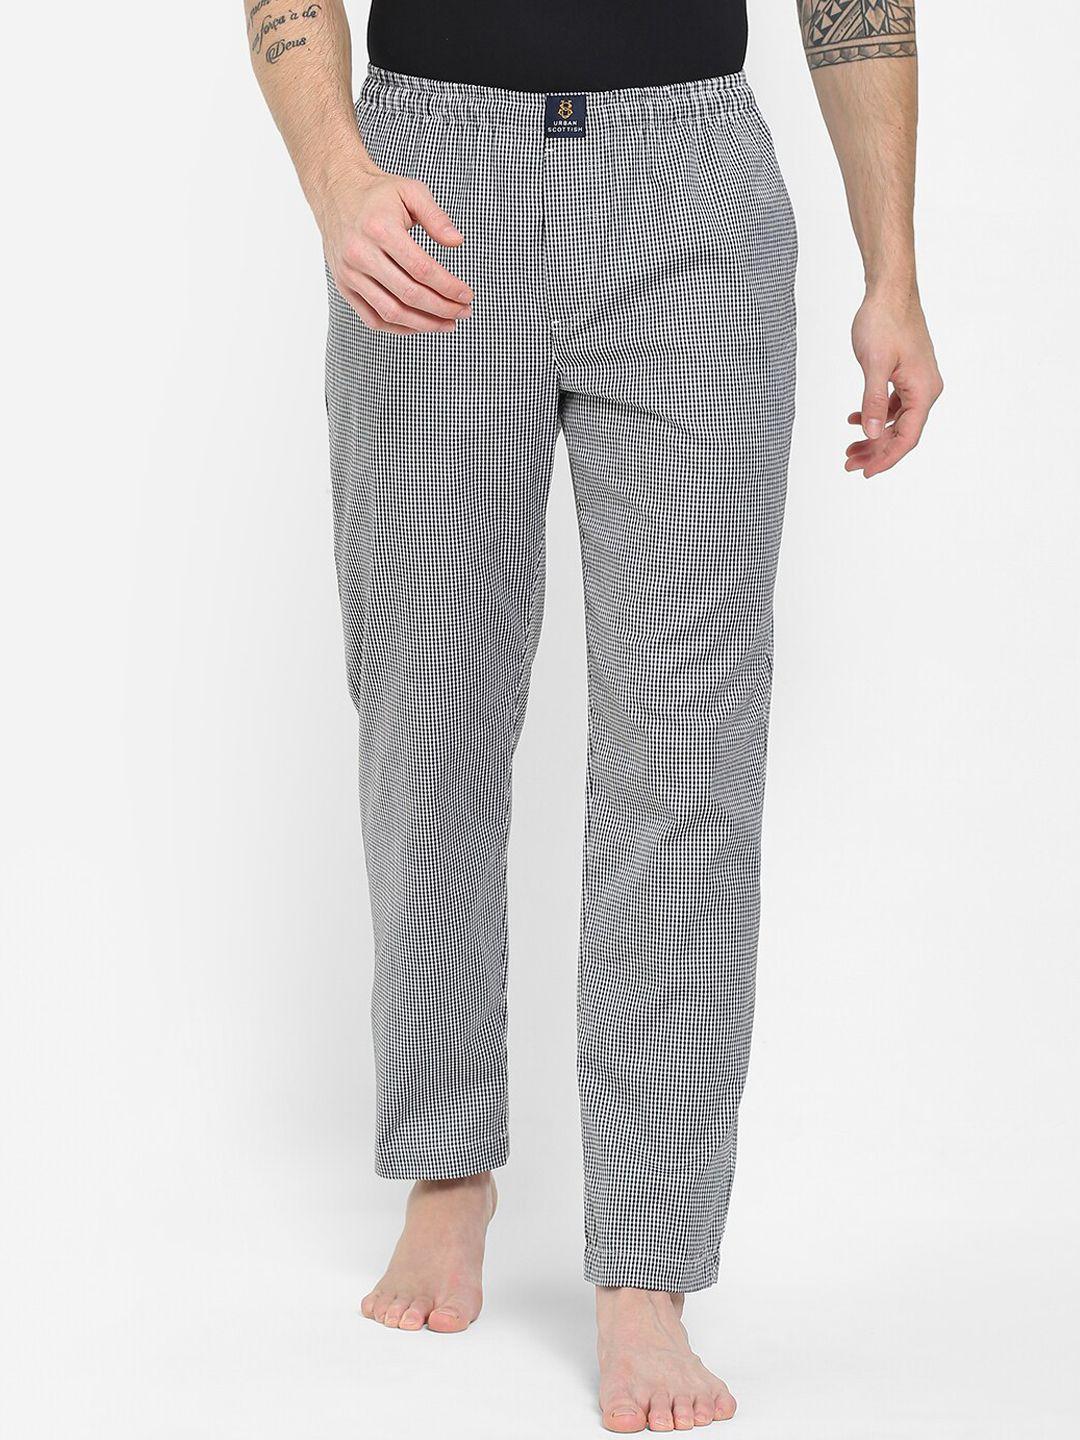 urban scottish men grey & white checked pure cotton lounge pants